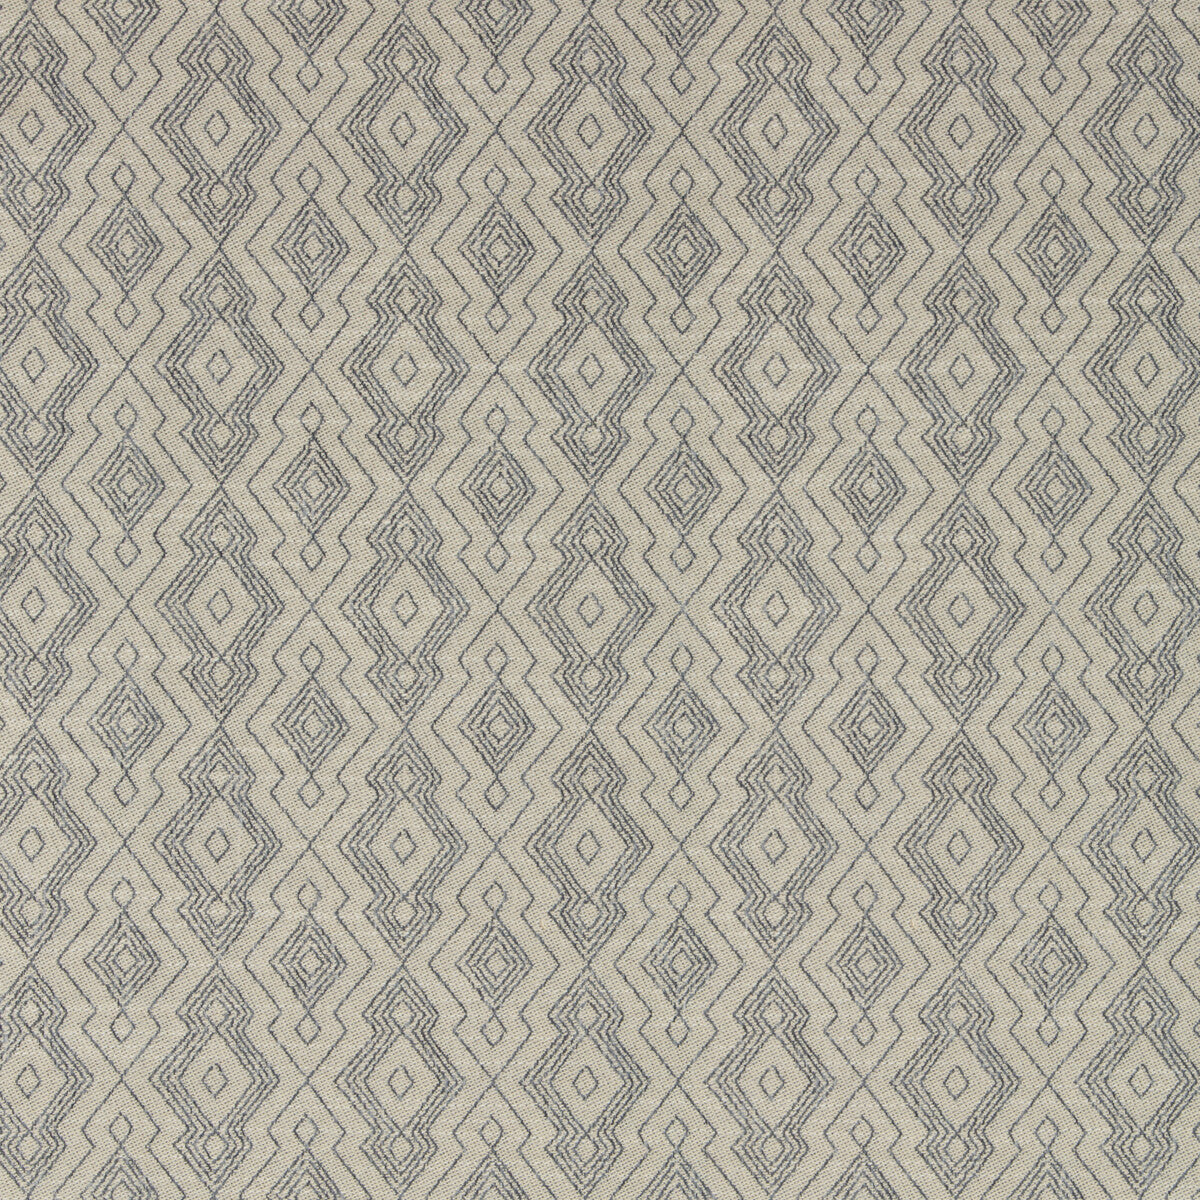 Kravet Smart fabric in 35335-511 color - pattern 35335.511.0 - by Kravet Smart in the Performance Kravetarmor collection